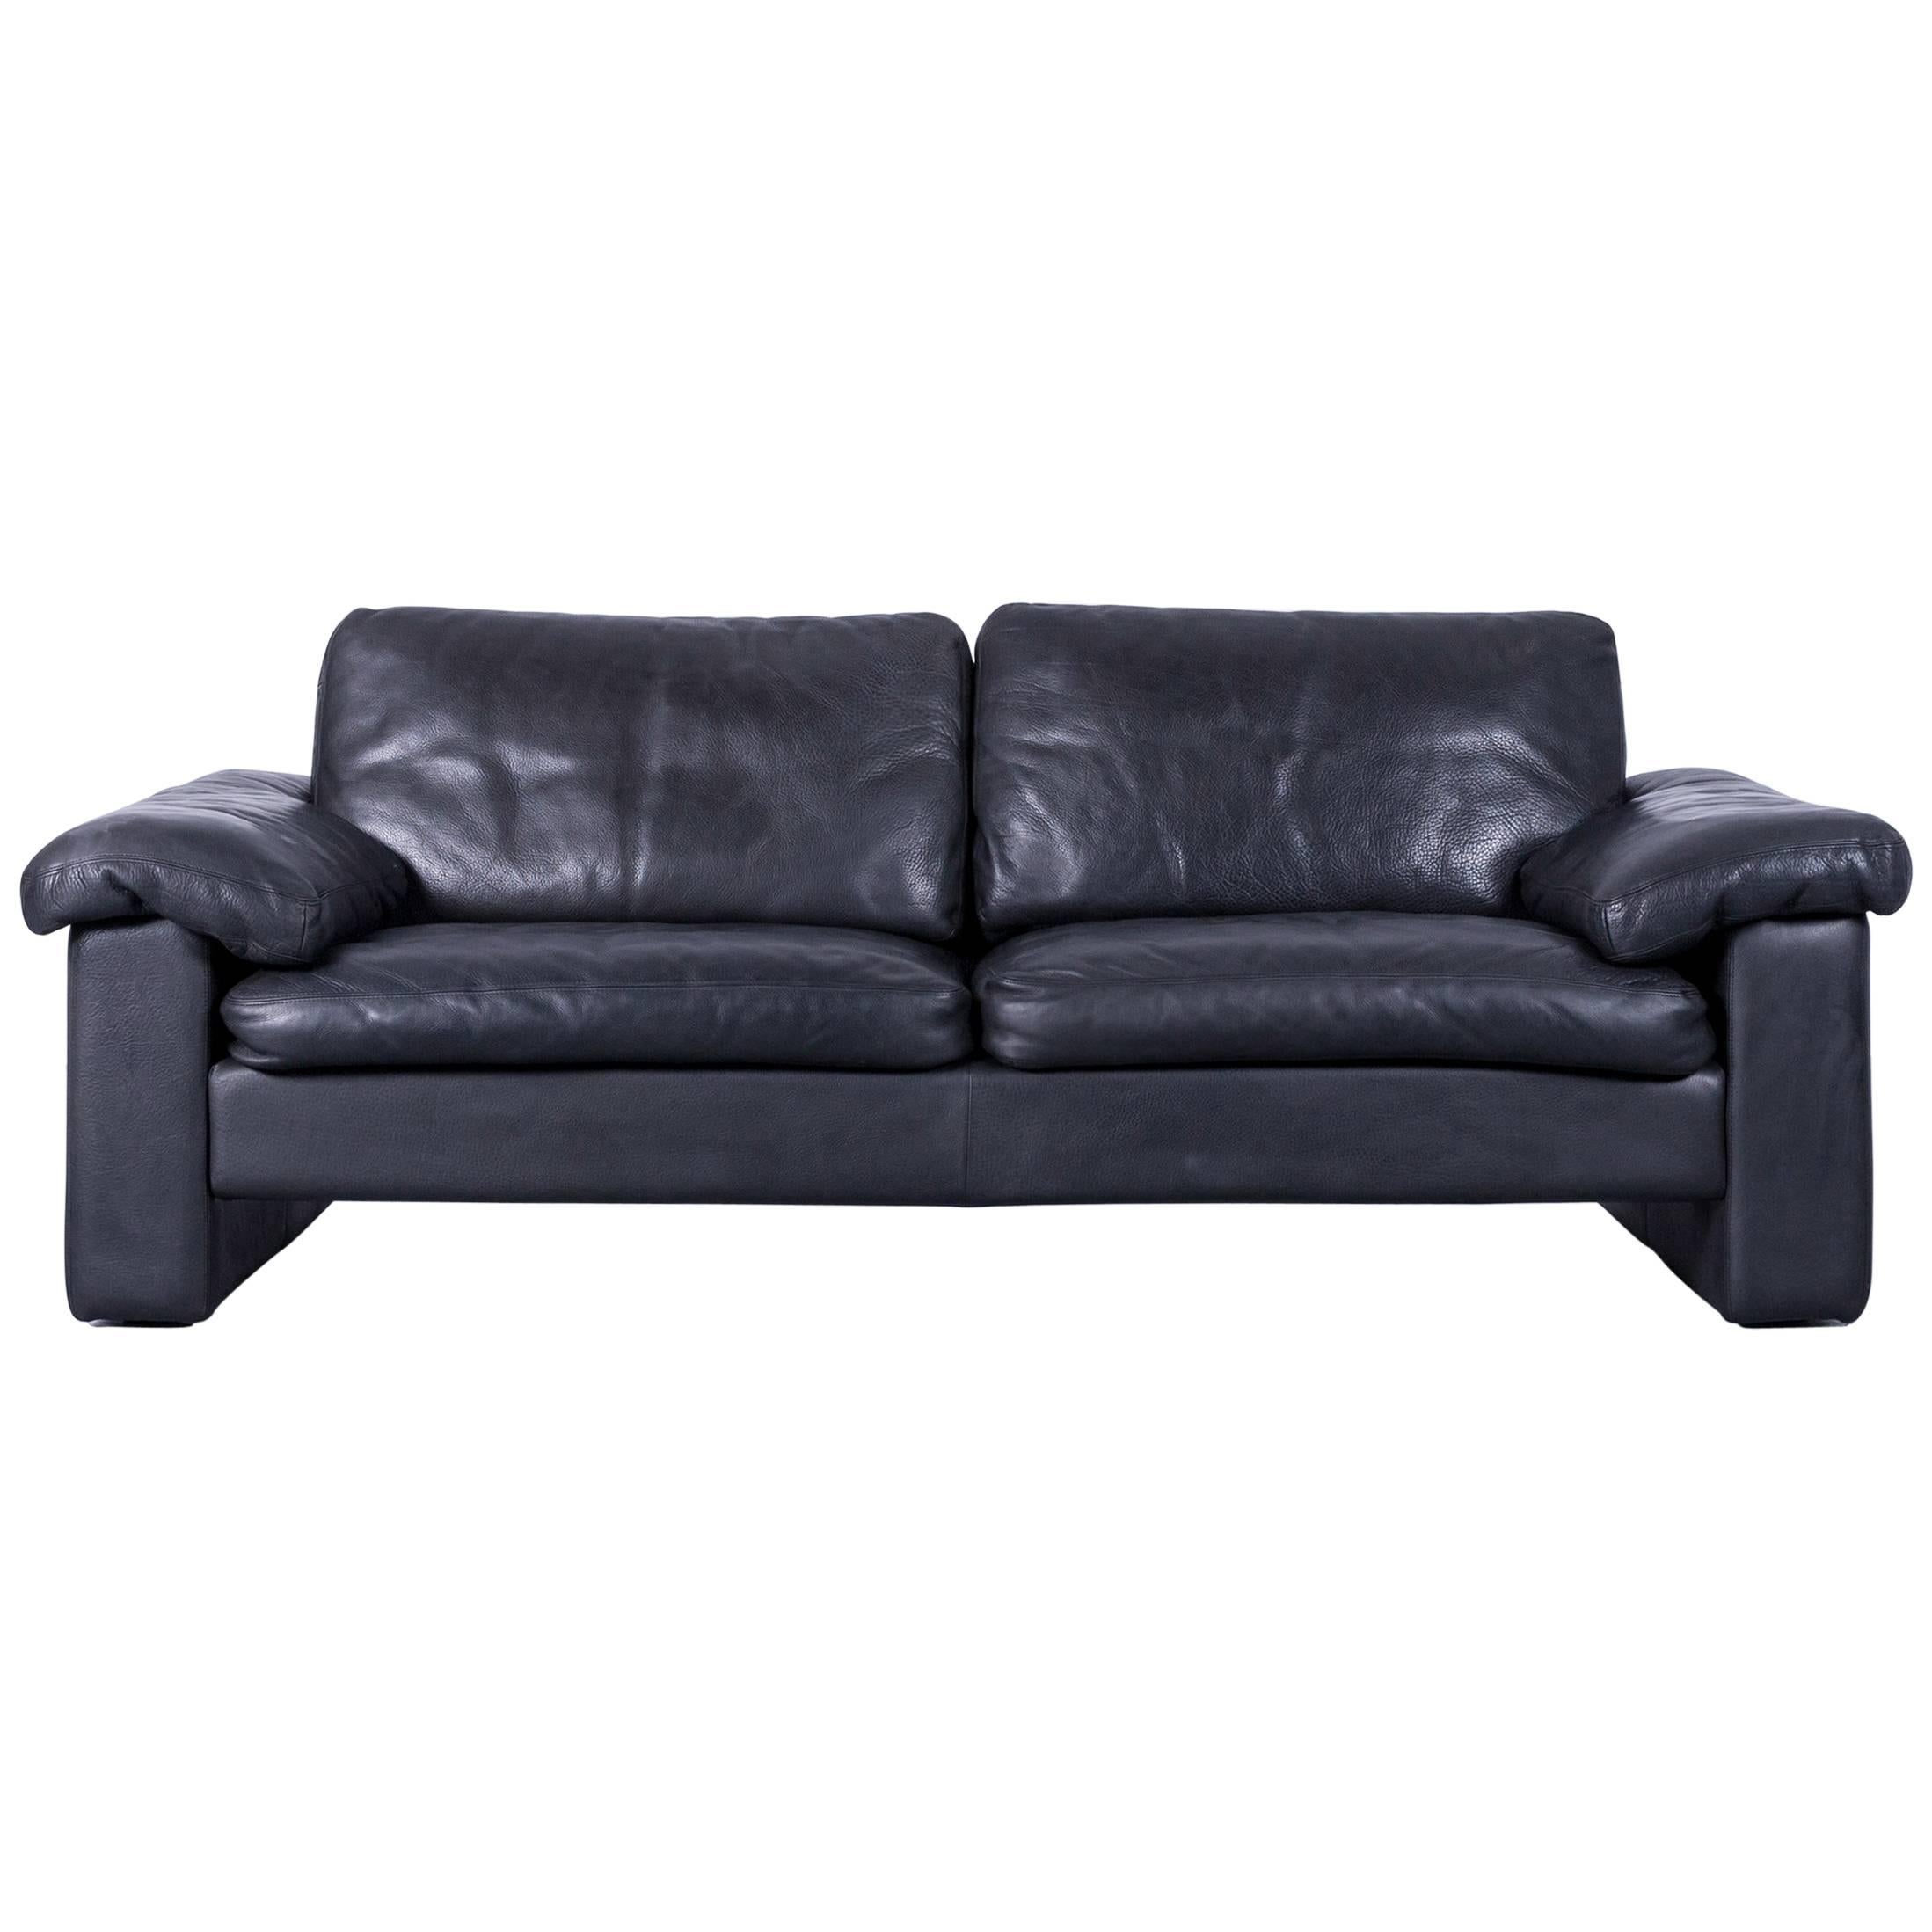 COR Conseta Designer leather Sofa black Two-Seat Couch Friedrich-Wilhelm Möller